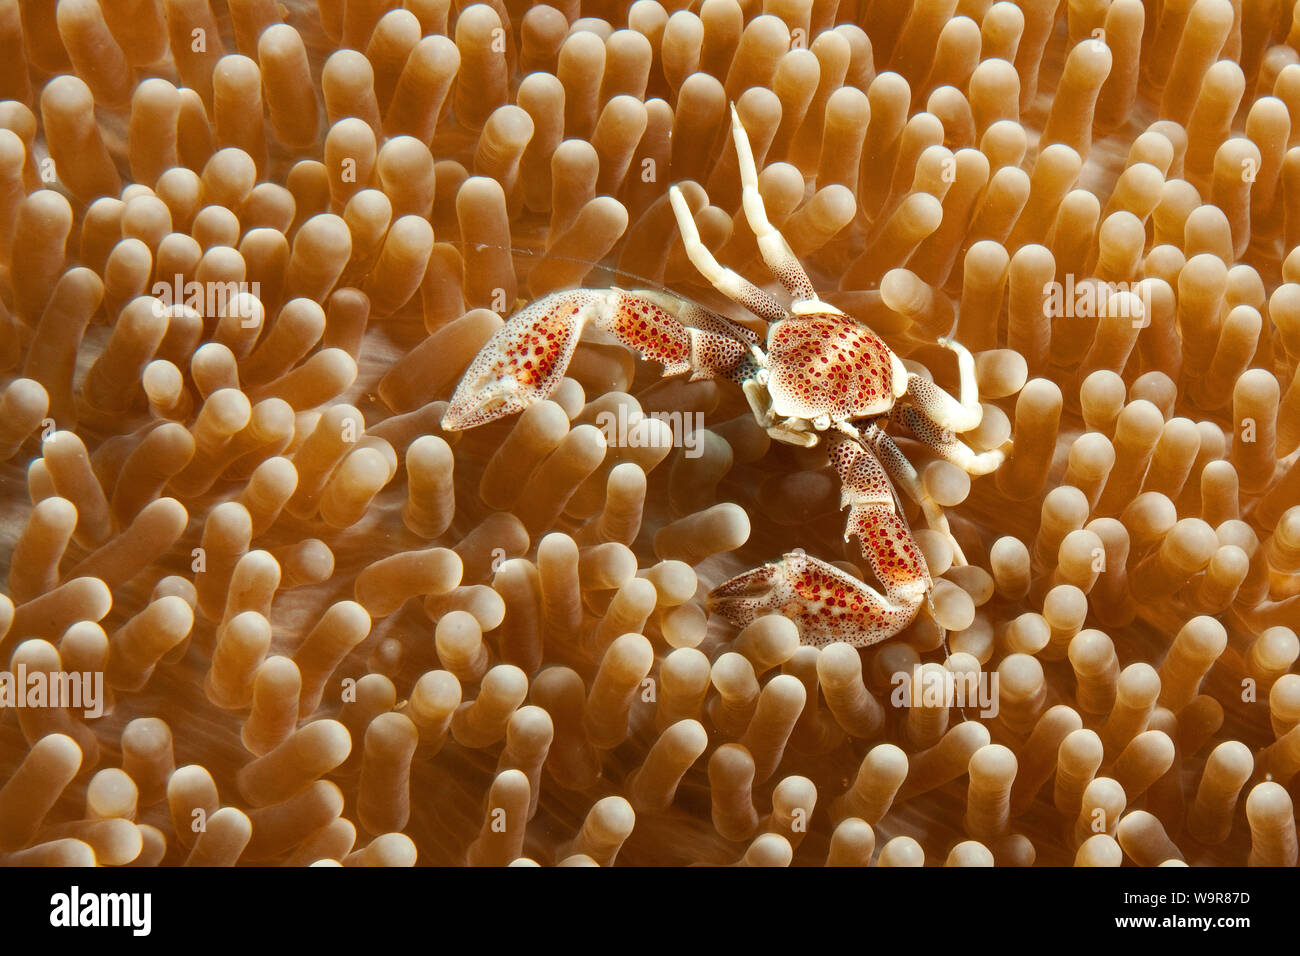 Anemone granchio porcellana, Indo-pacifico, (Neopetrolisthes maculatus) Foto Stock